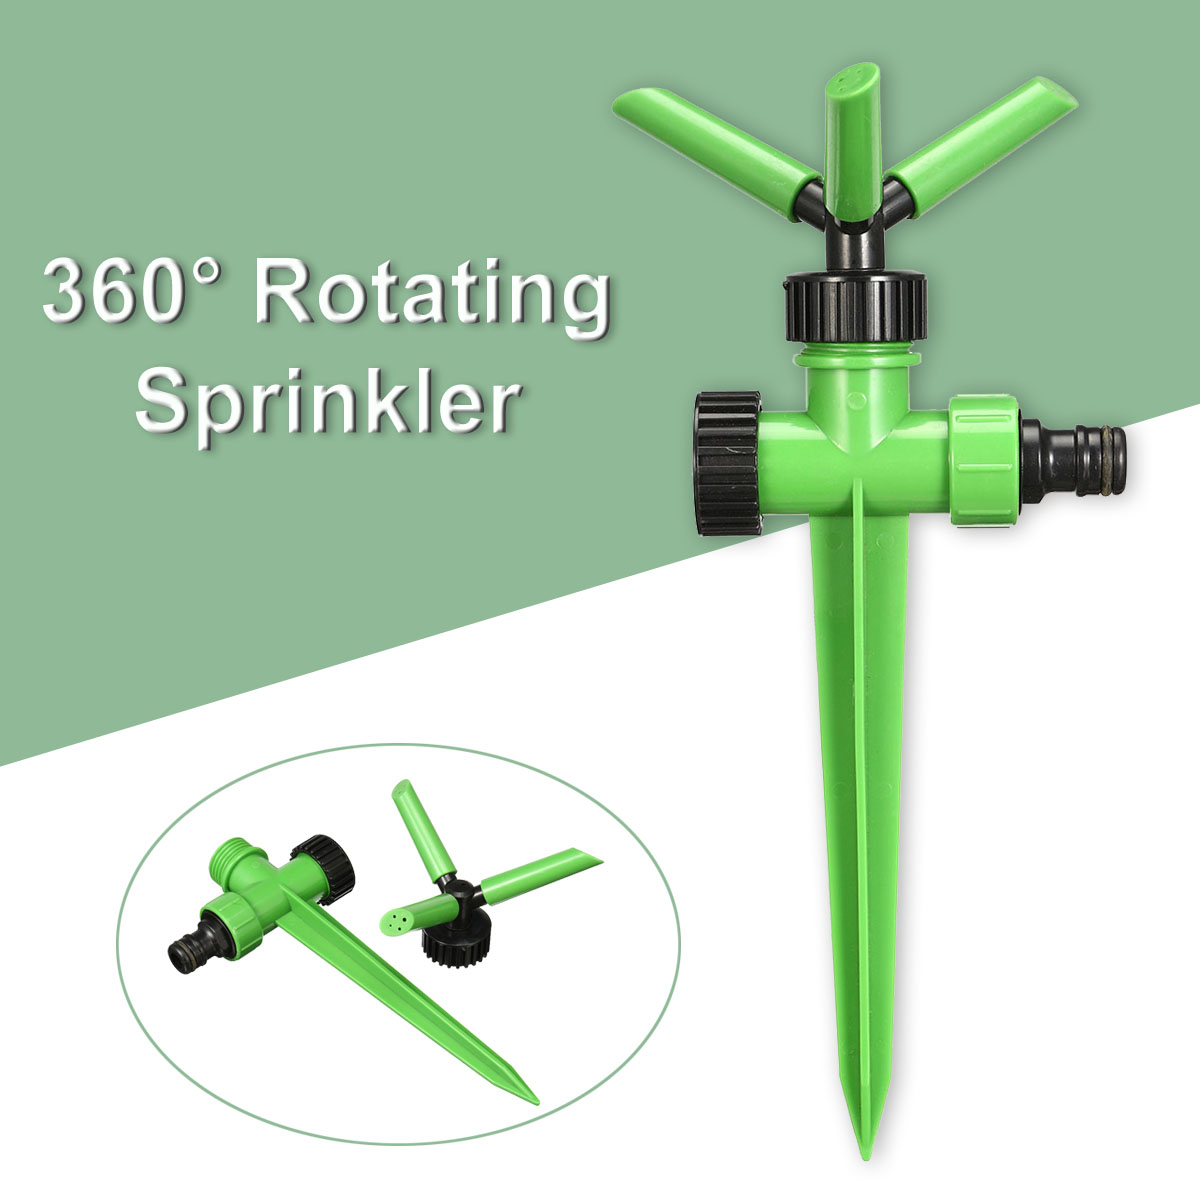 Garden-Yard-360-Rotating-Lawn-Sprinkler-Outdoor-Lawn-Water-Sprayer-Irrigation-Tool-1548511-1